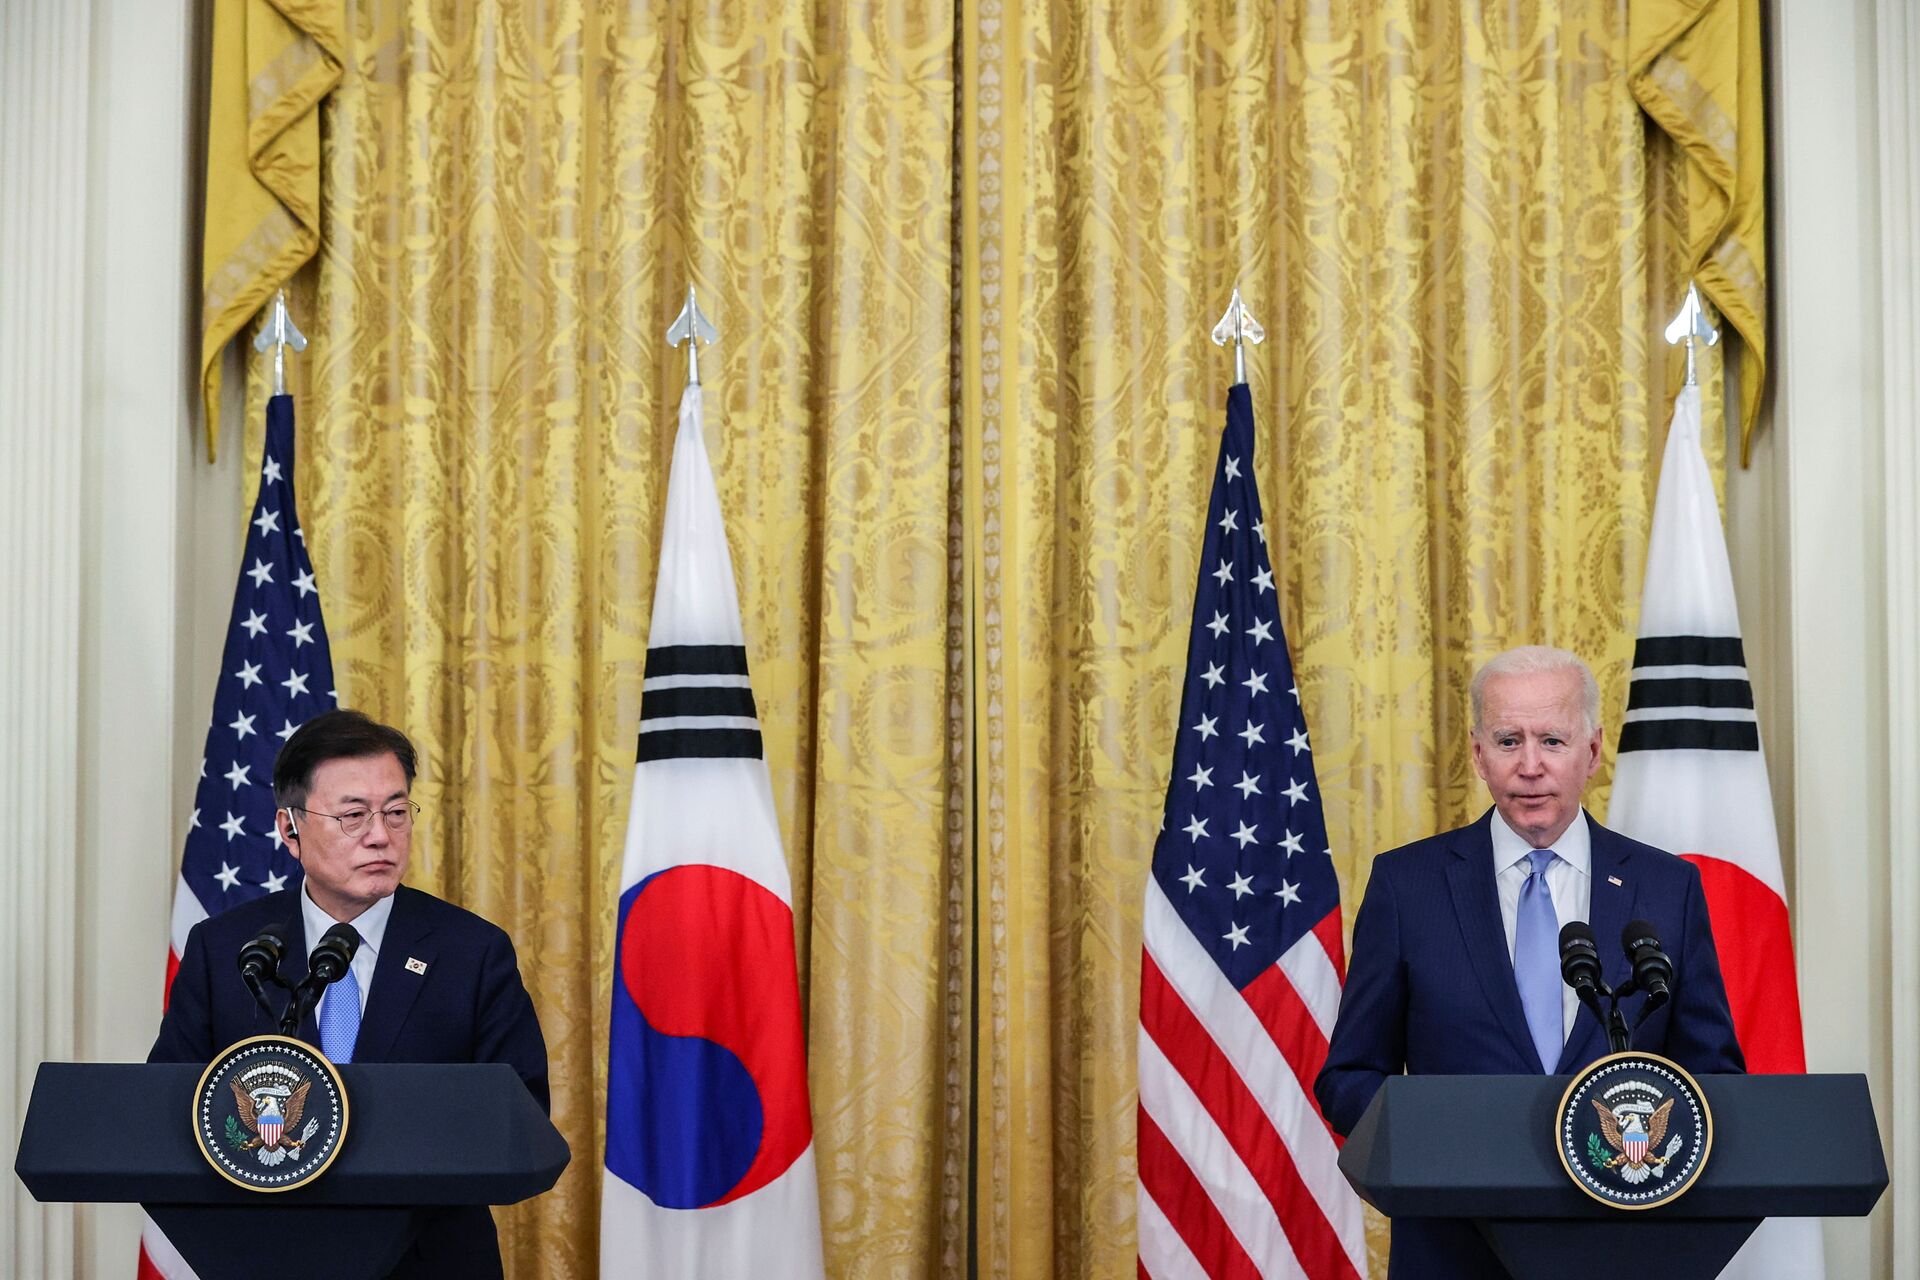 Biden afirma que só se encontrará com Kim Jong-un se ele aceitar desnuclearização - Sputnik Brasil, 1920, 22.05.2021